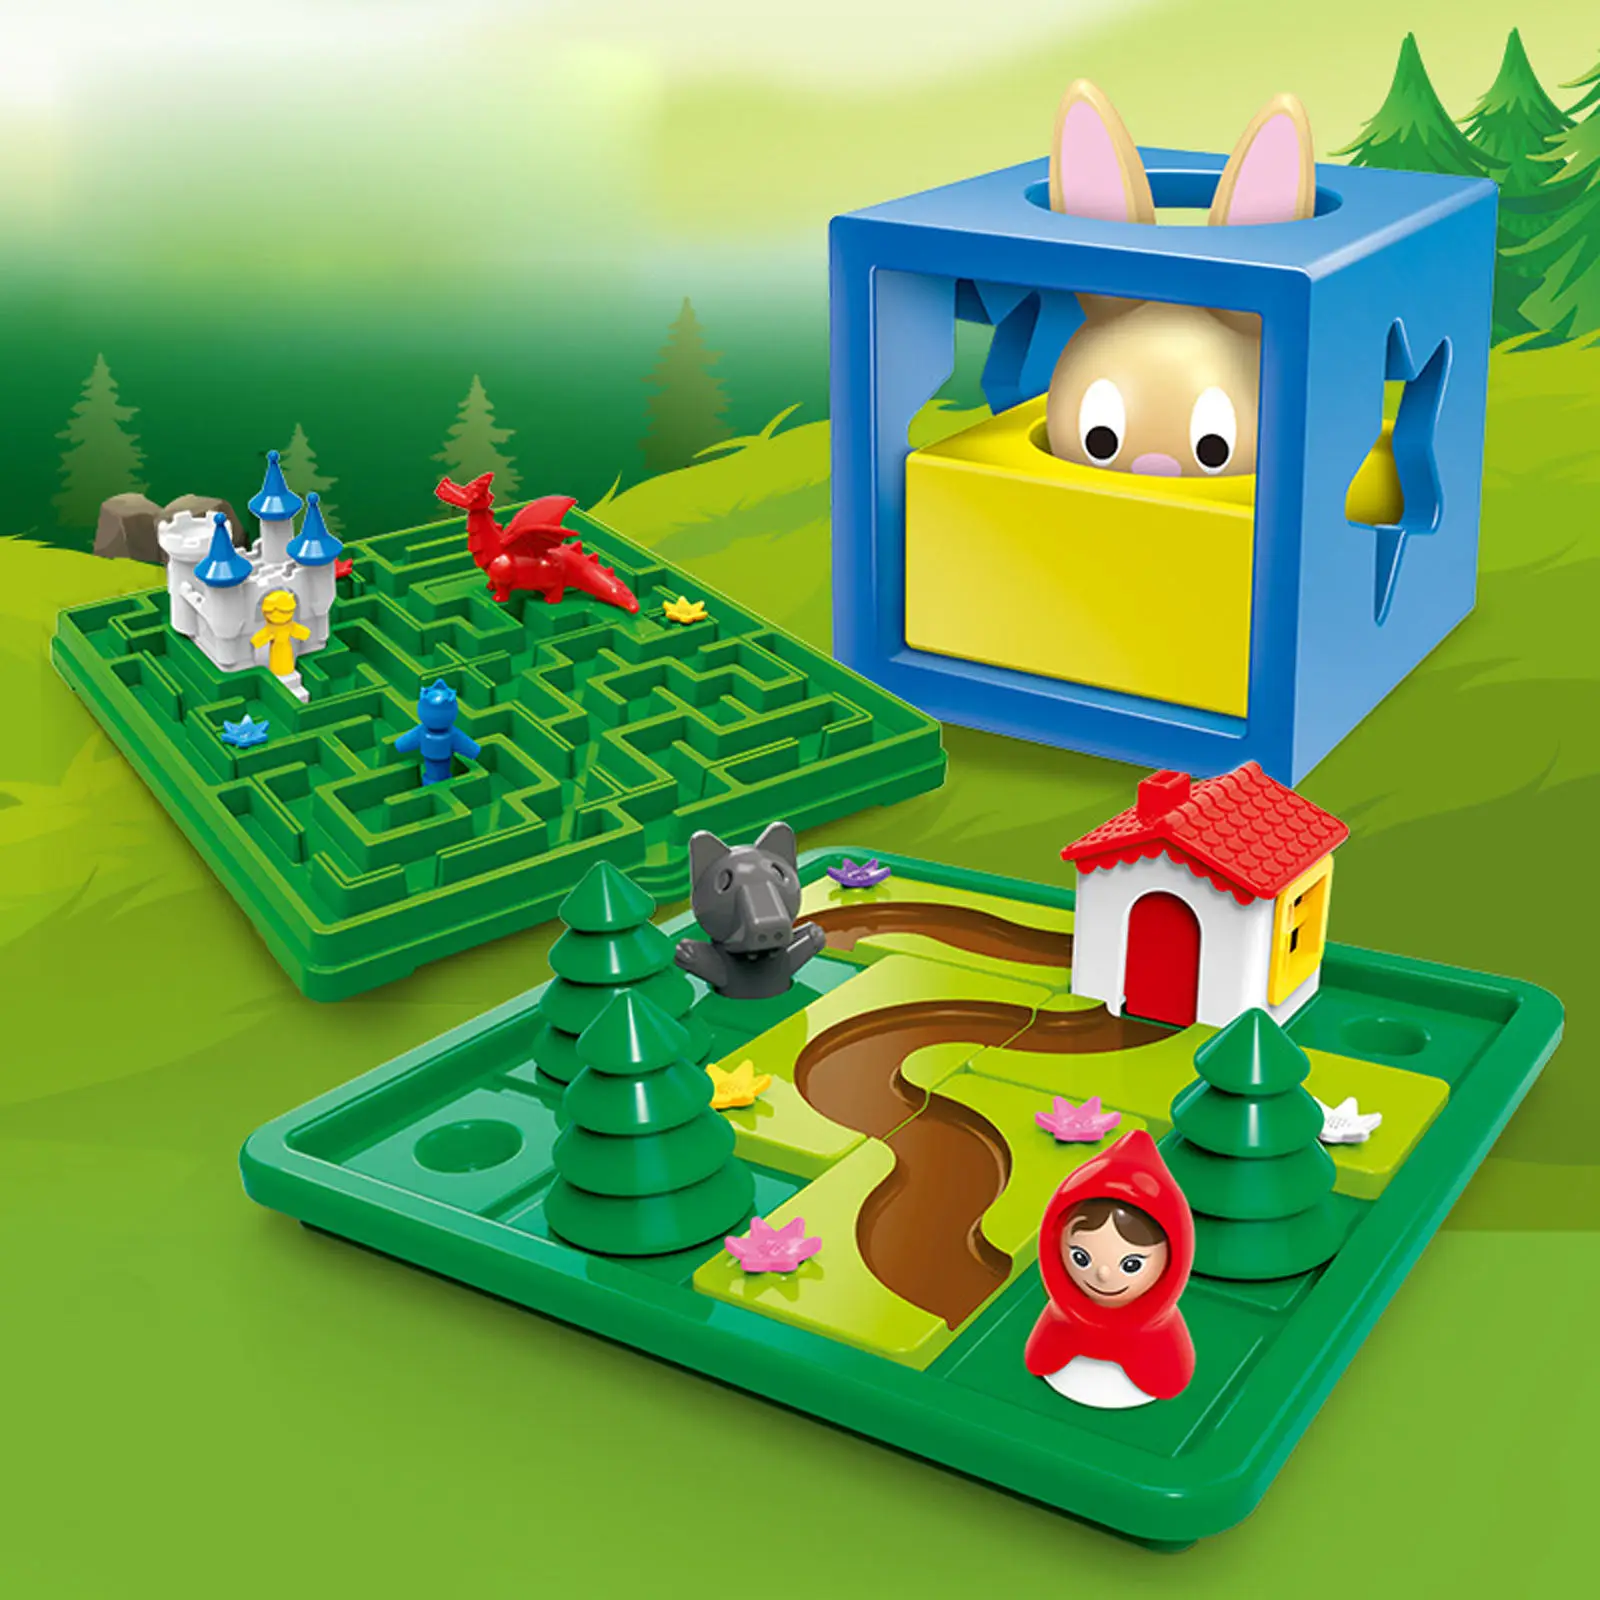 Kids Board Games, Smart Games Sleeping Beauty Logic Educational Travel Game Toy Kids Brain